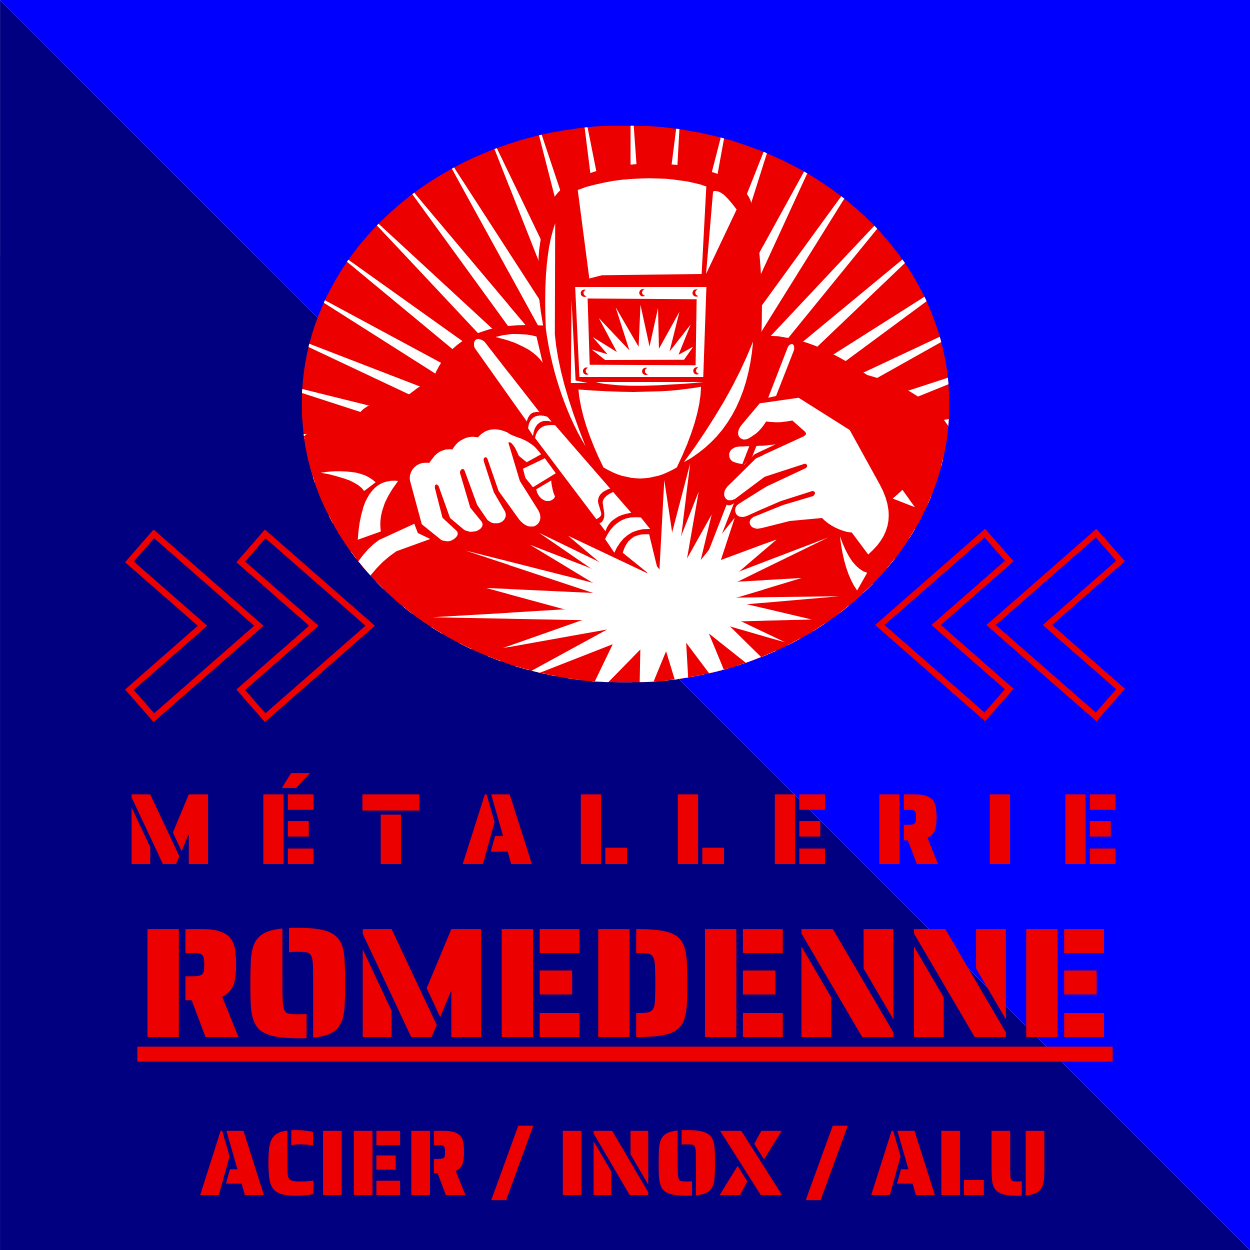 Métallerie Romedenne - Acier - Inox - Alu